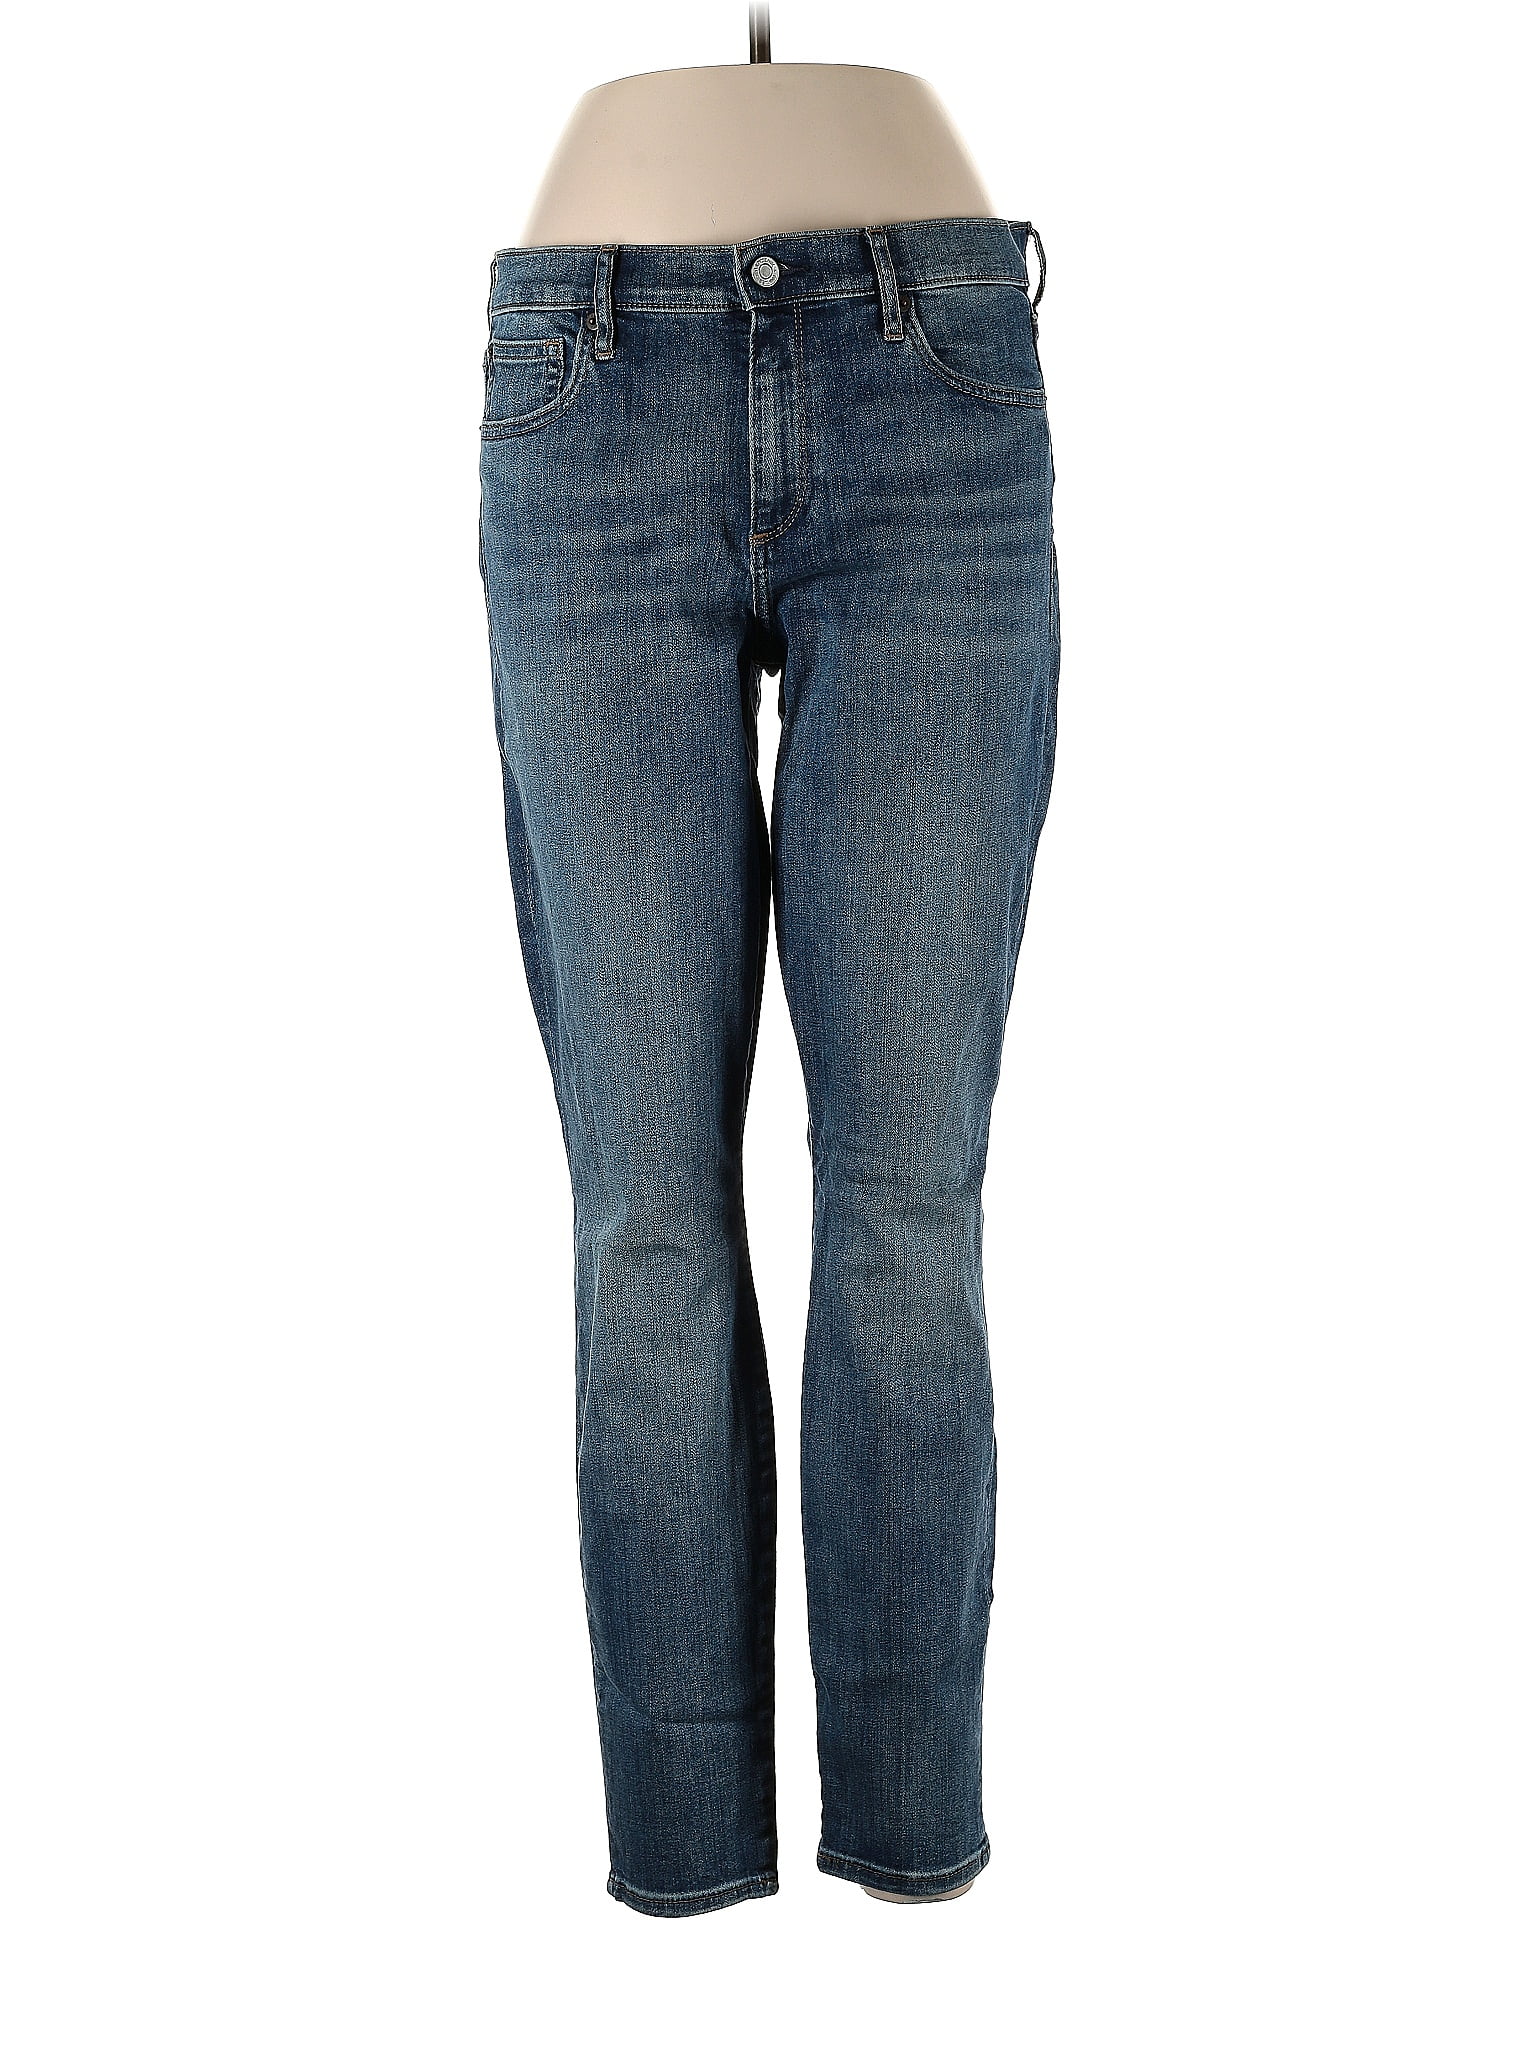 Gap Solid Blue Jeans 32 Waist - 68% off | ThredUp